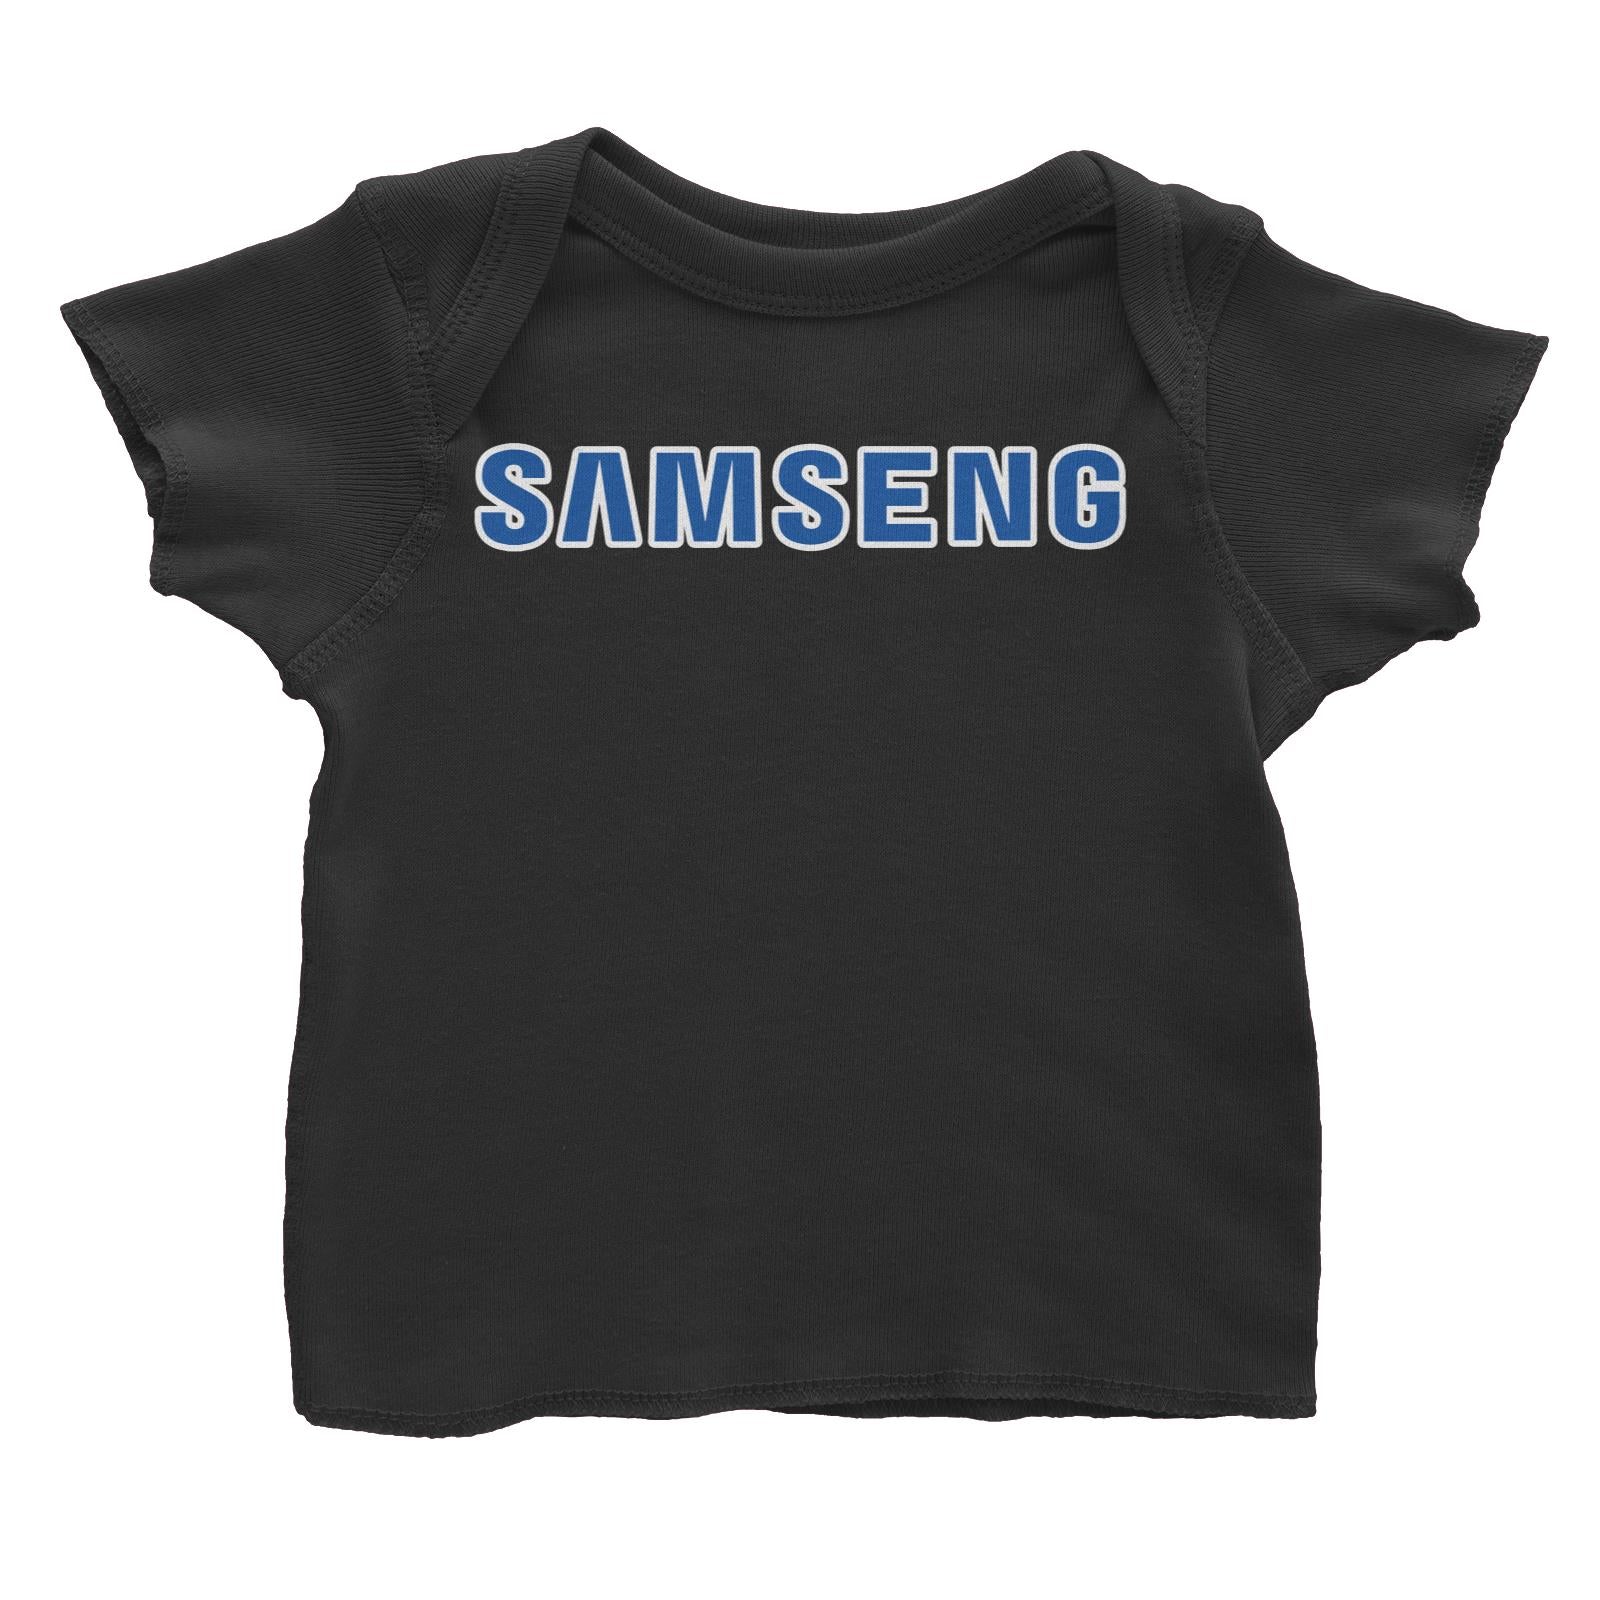 Slang Statement Samseng Baby T-Shirt